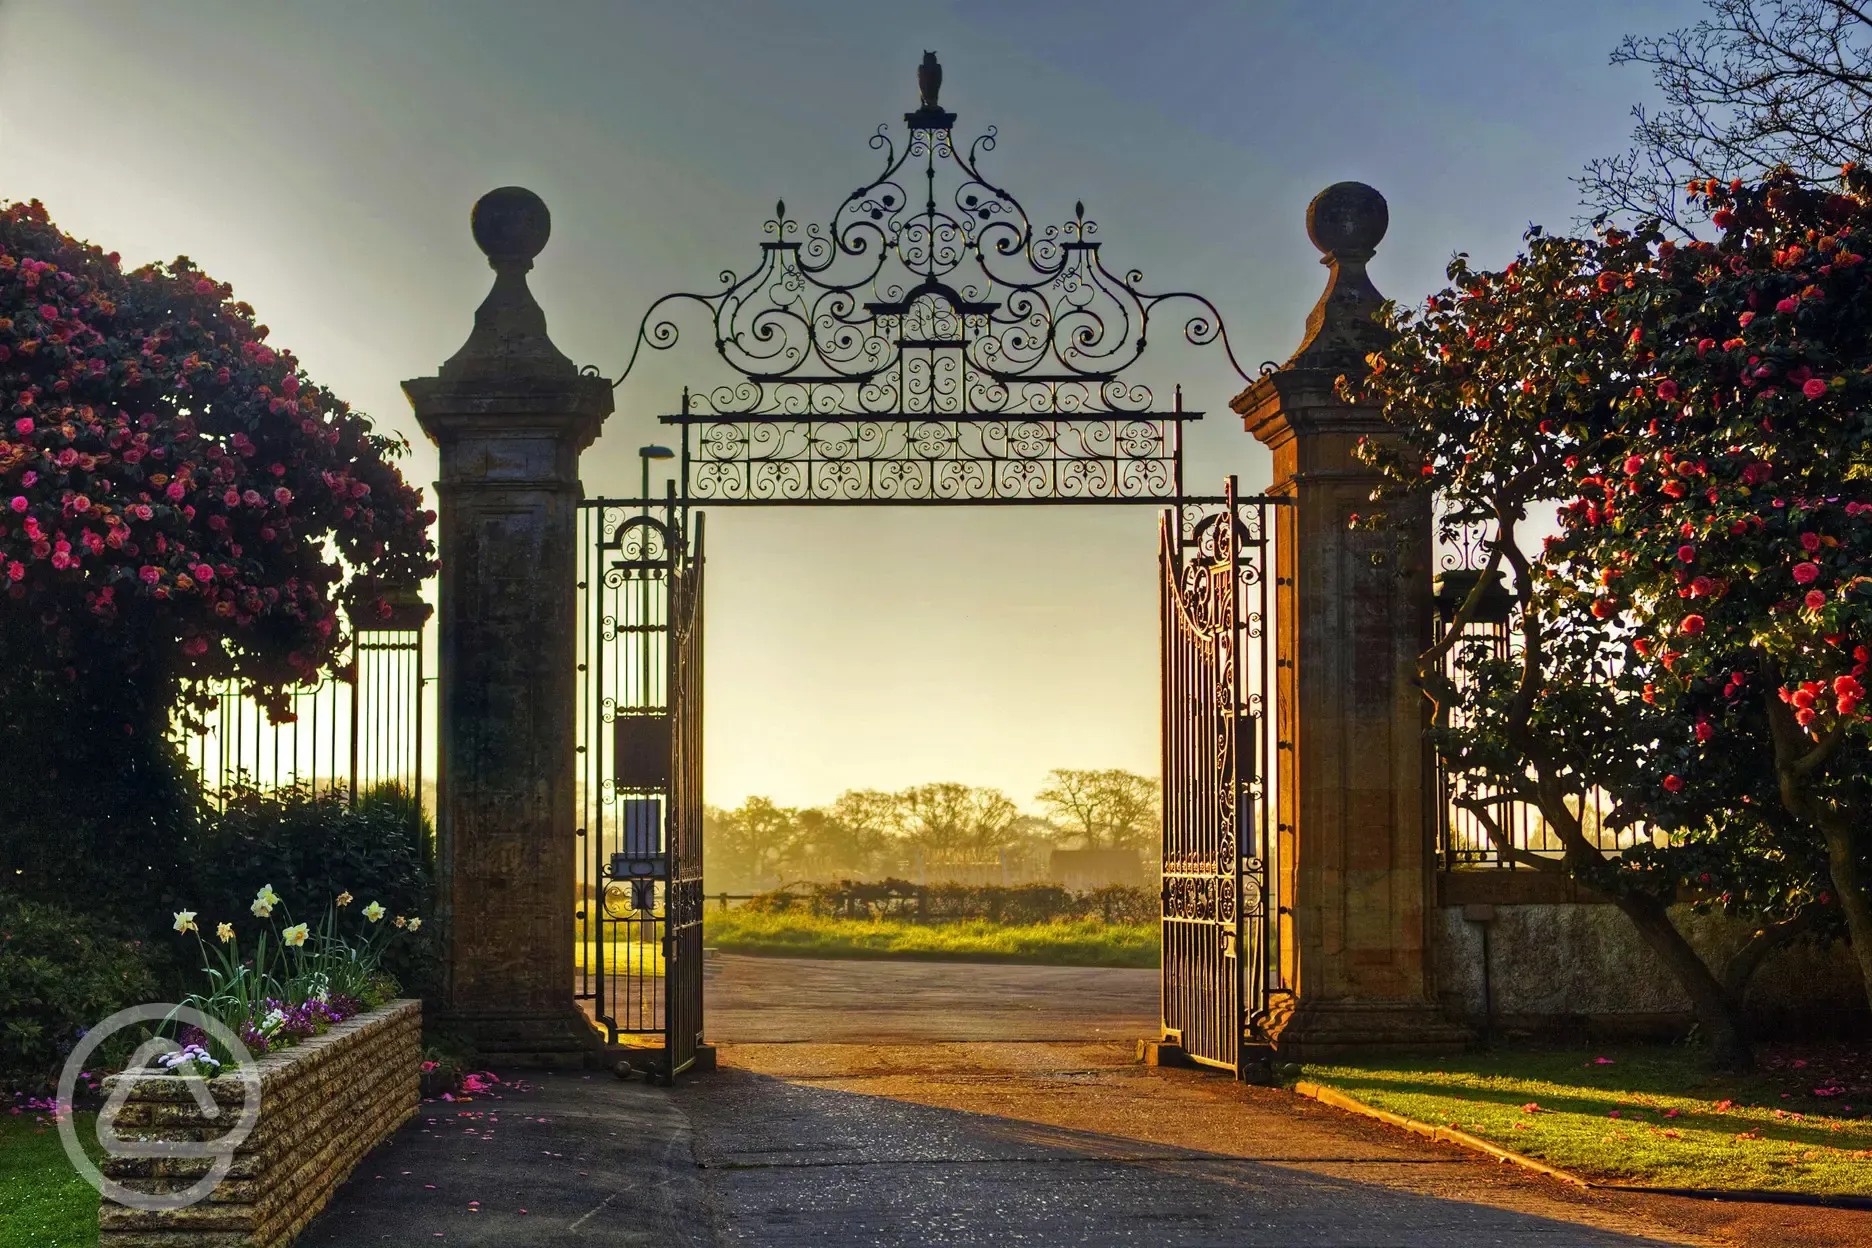 The impressive Manor gate entrance